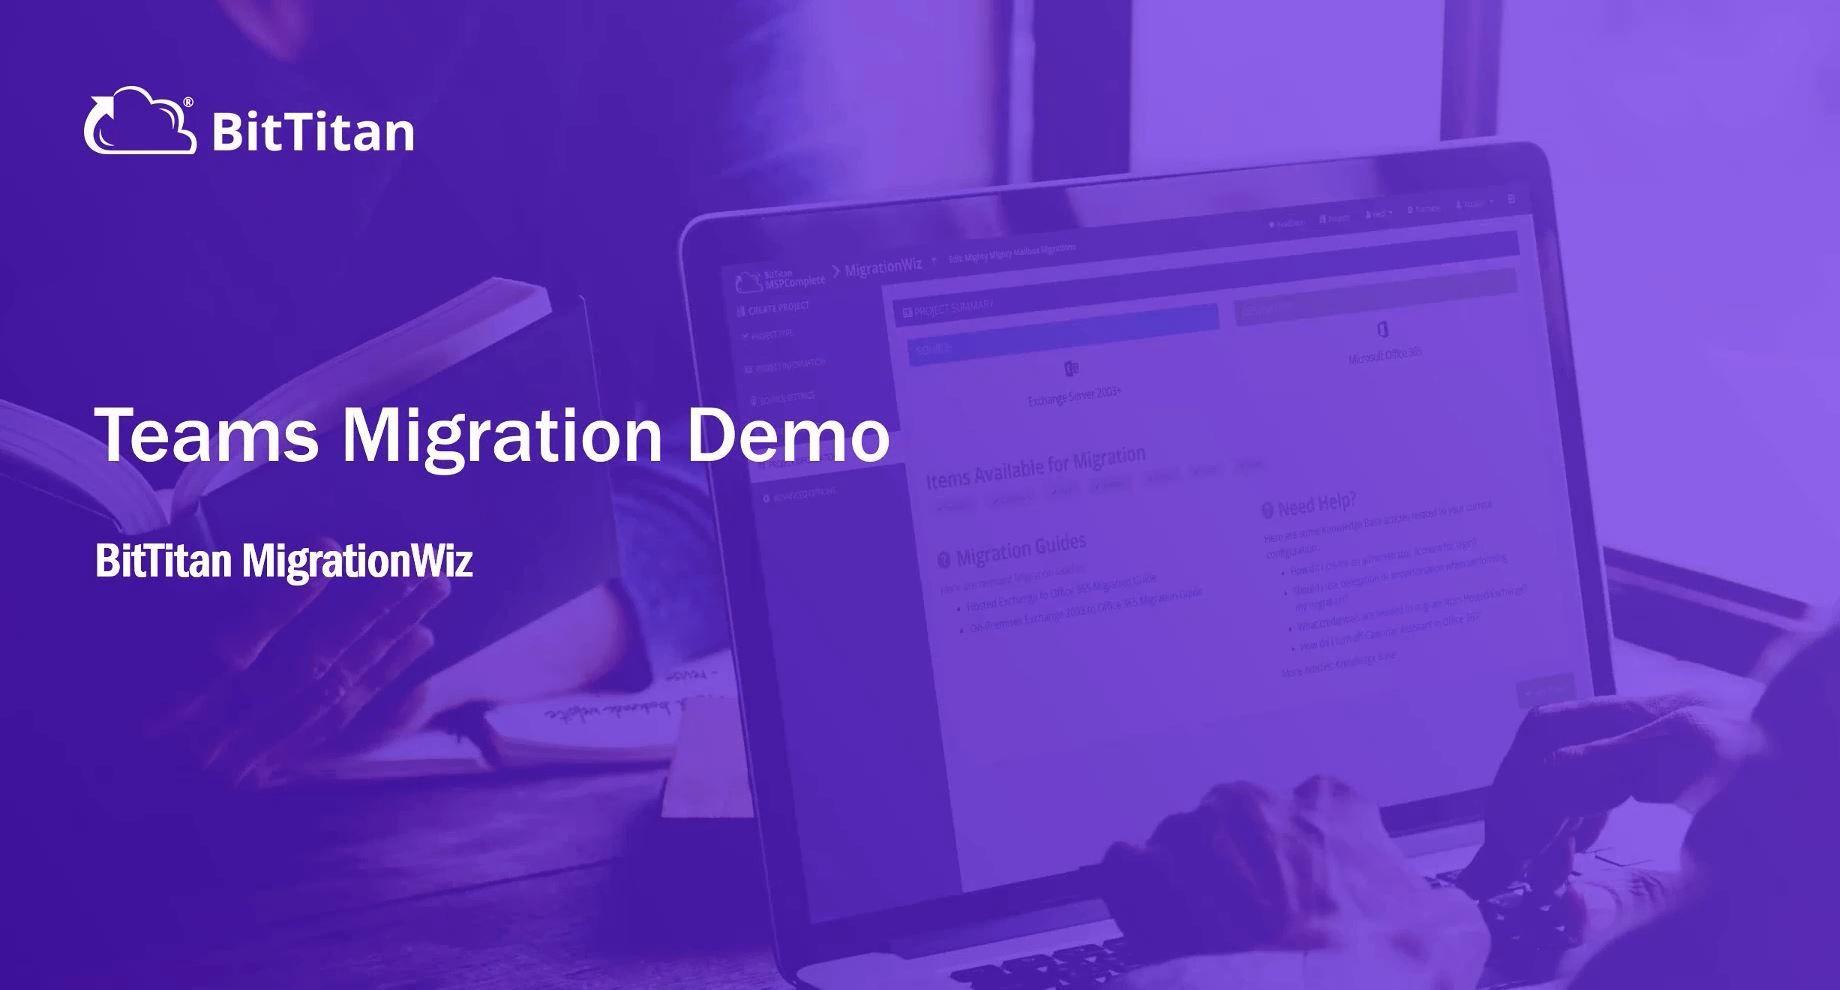 BitTitan Logo - MigrationWiz Microsoft Teams Demo Video